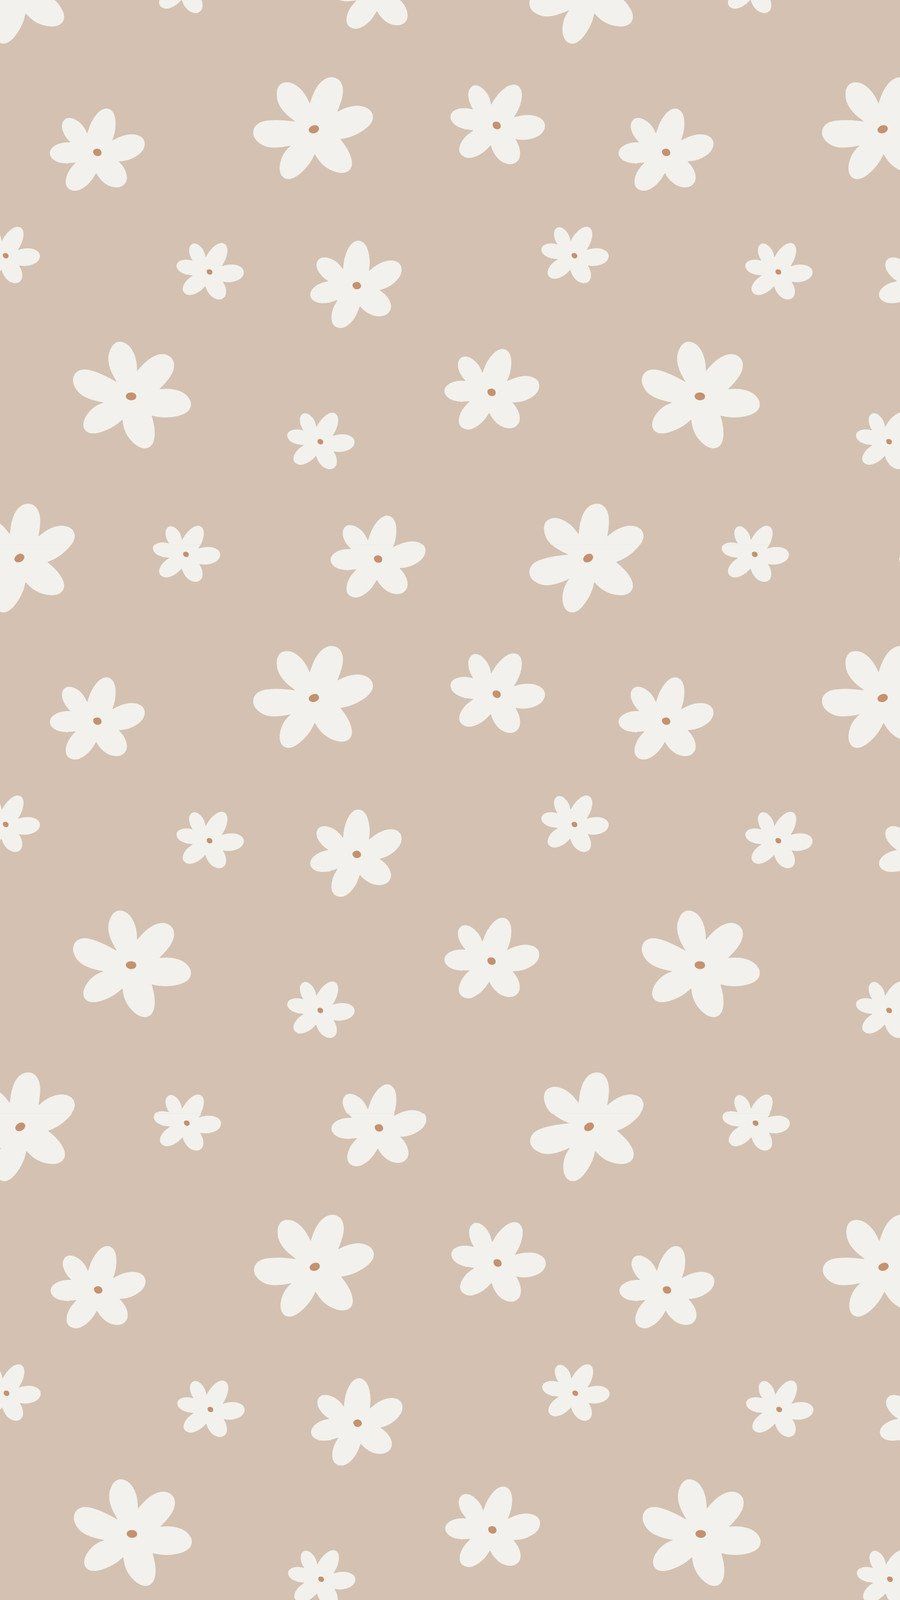 White, cute, neutral, spring, pattern, simple, terrazzo